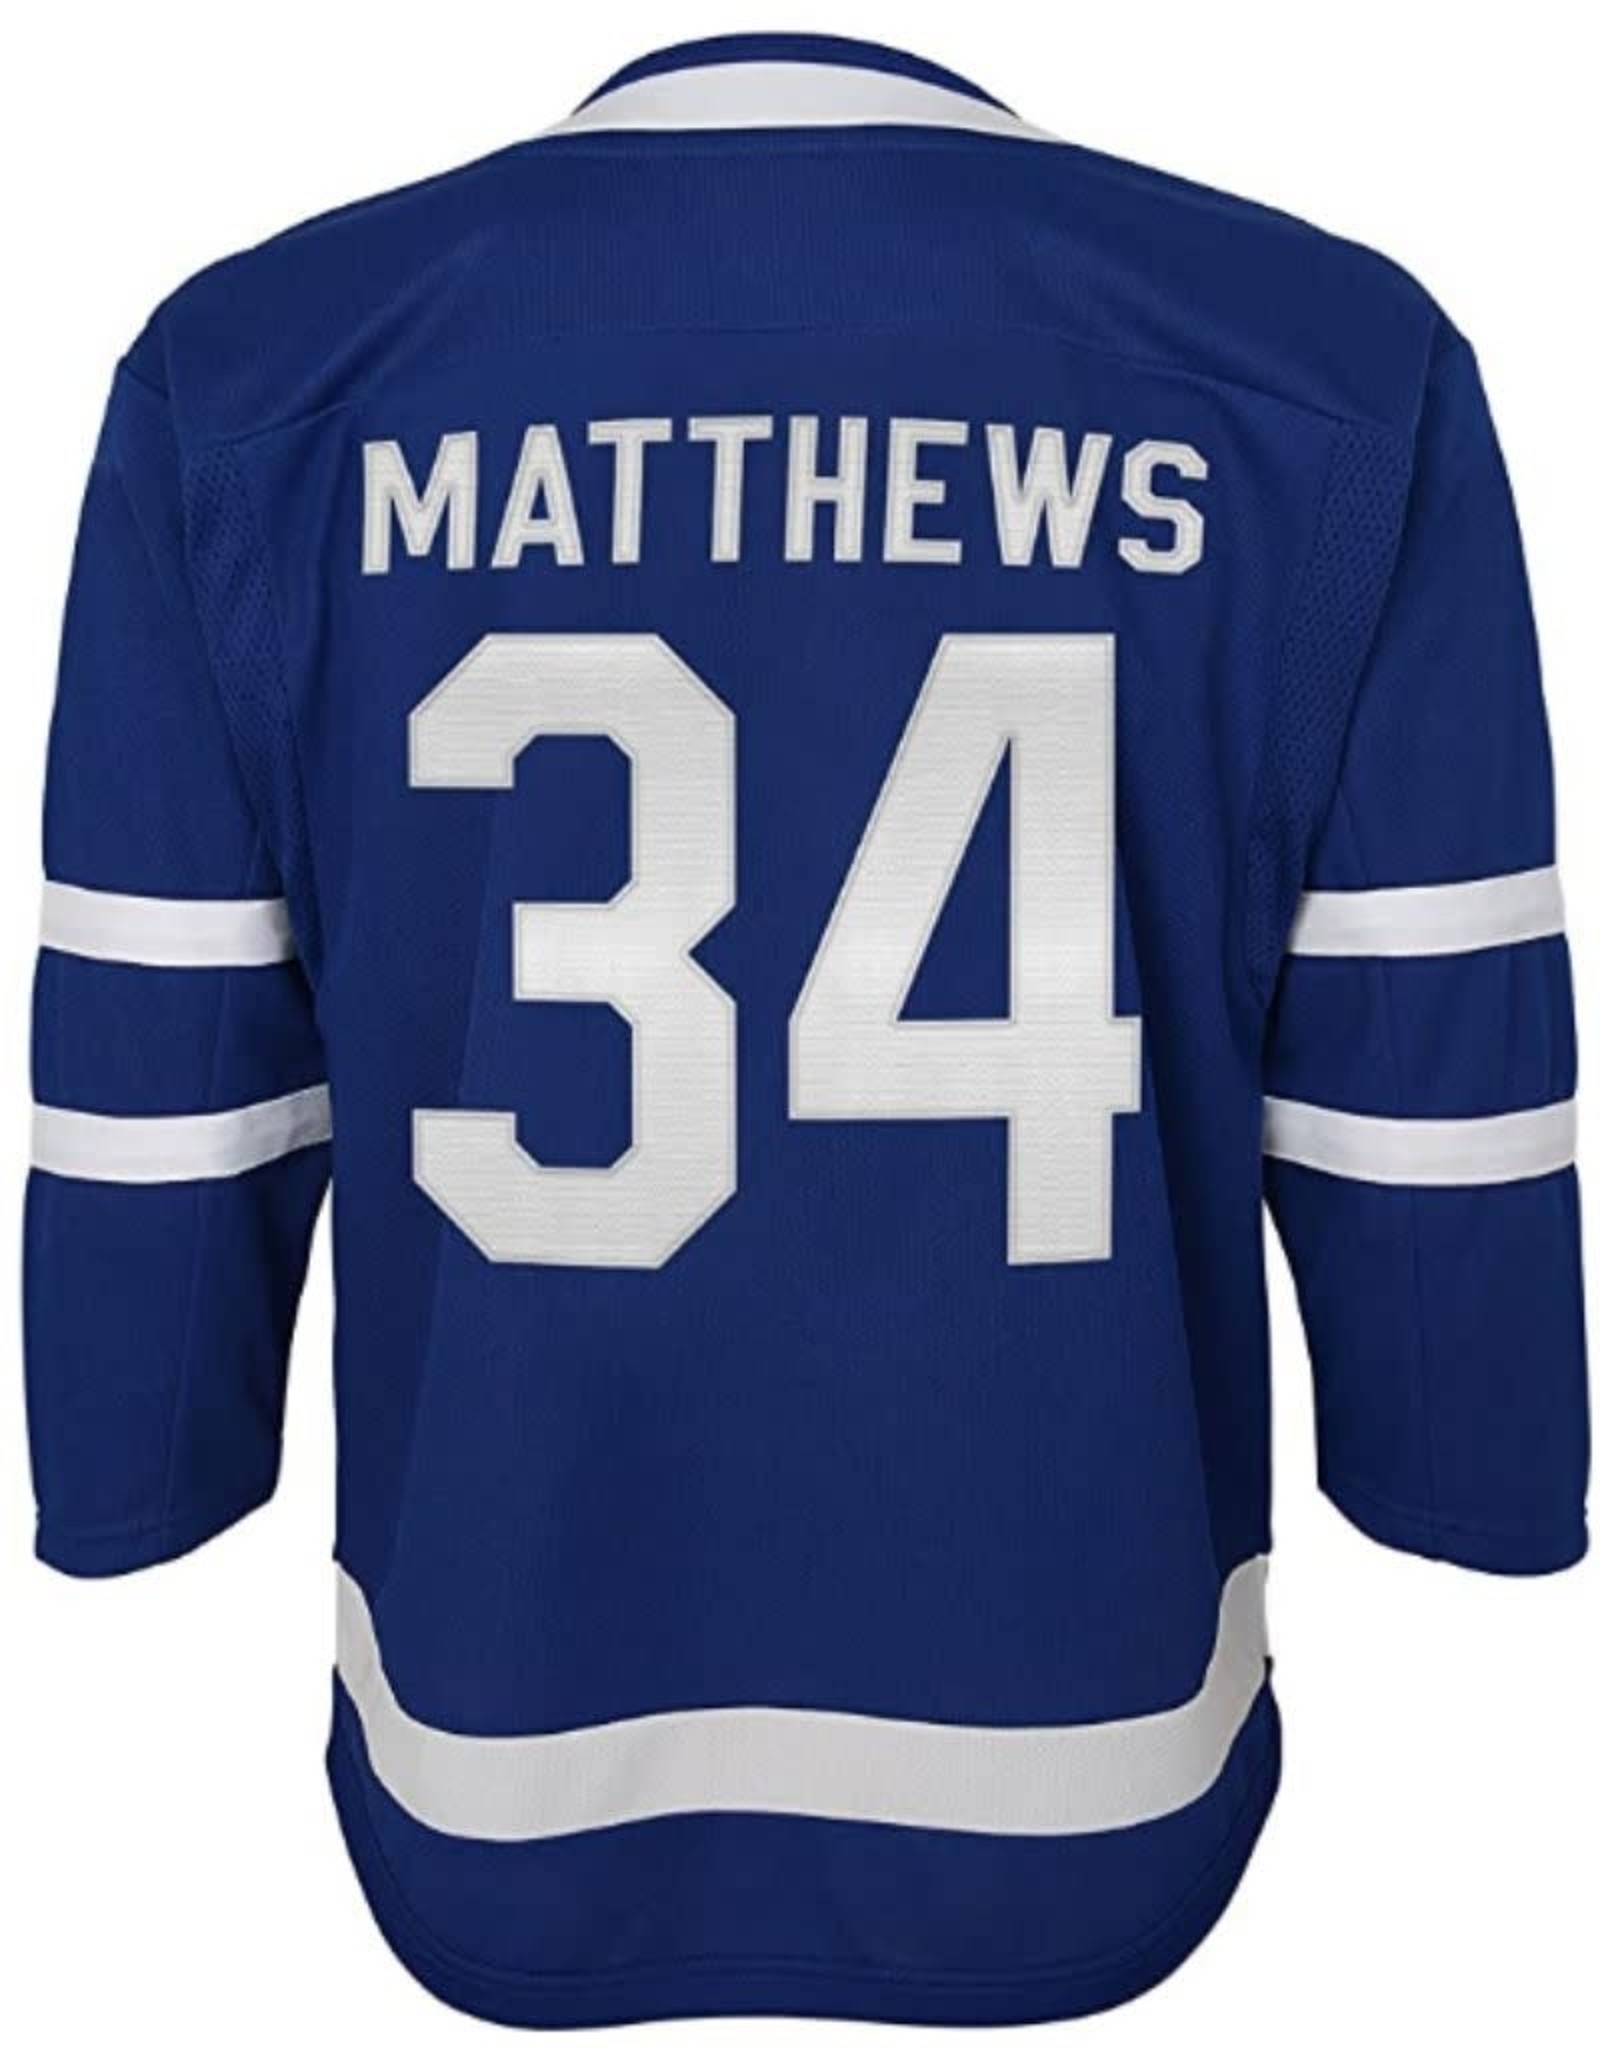 Matthews #34 Toronto Maple leafs Blue 